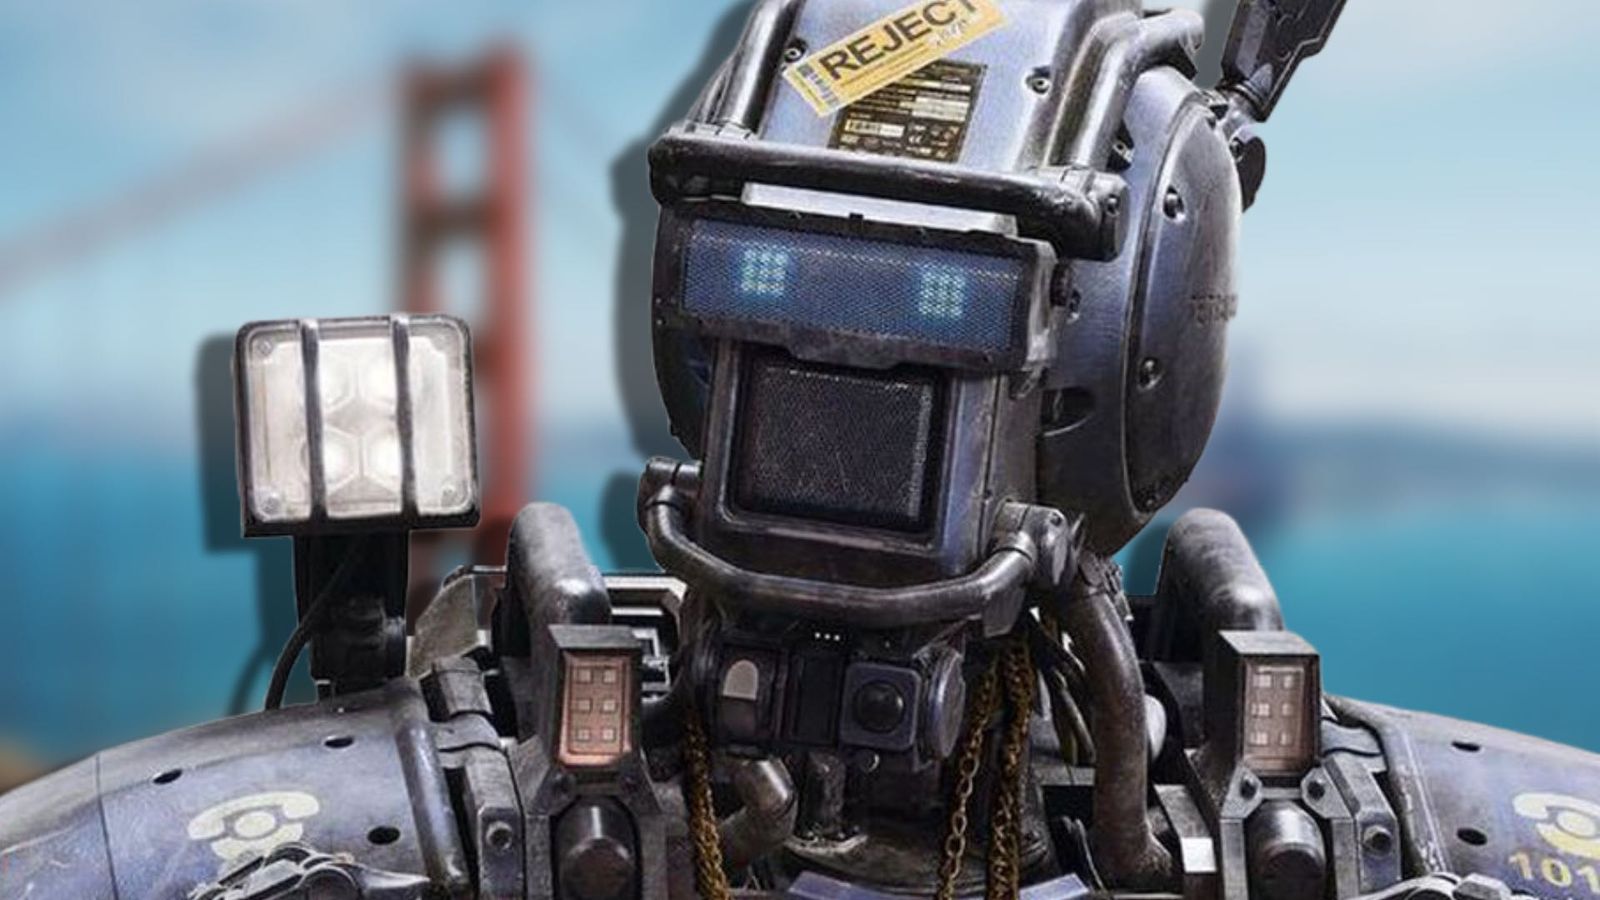 Killer robot cops in San Francisco 